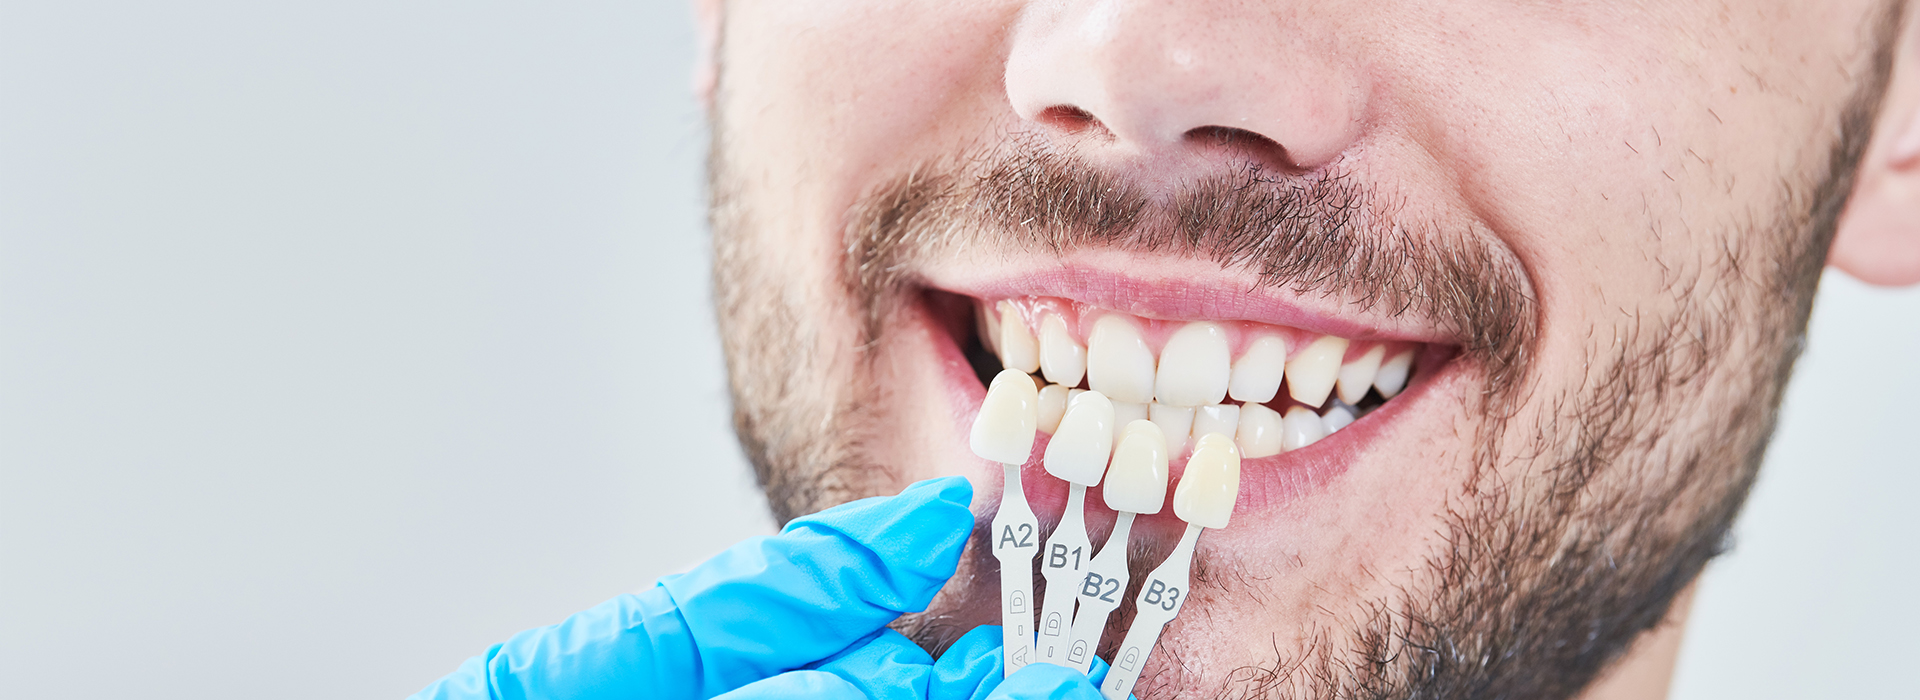 1Smile Dental | Sedation Dentistry, Emergency Treatment and Digital Radiography